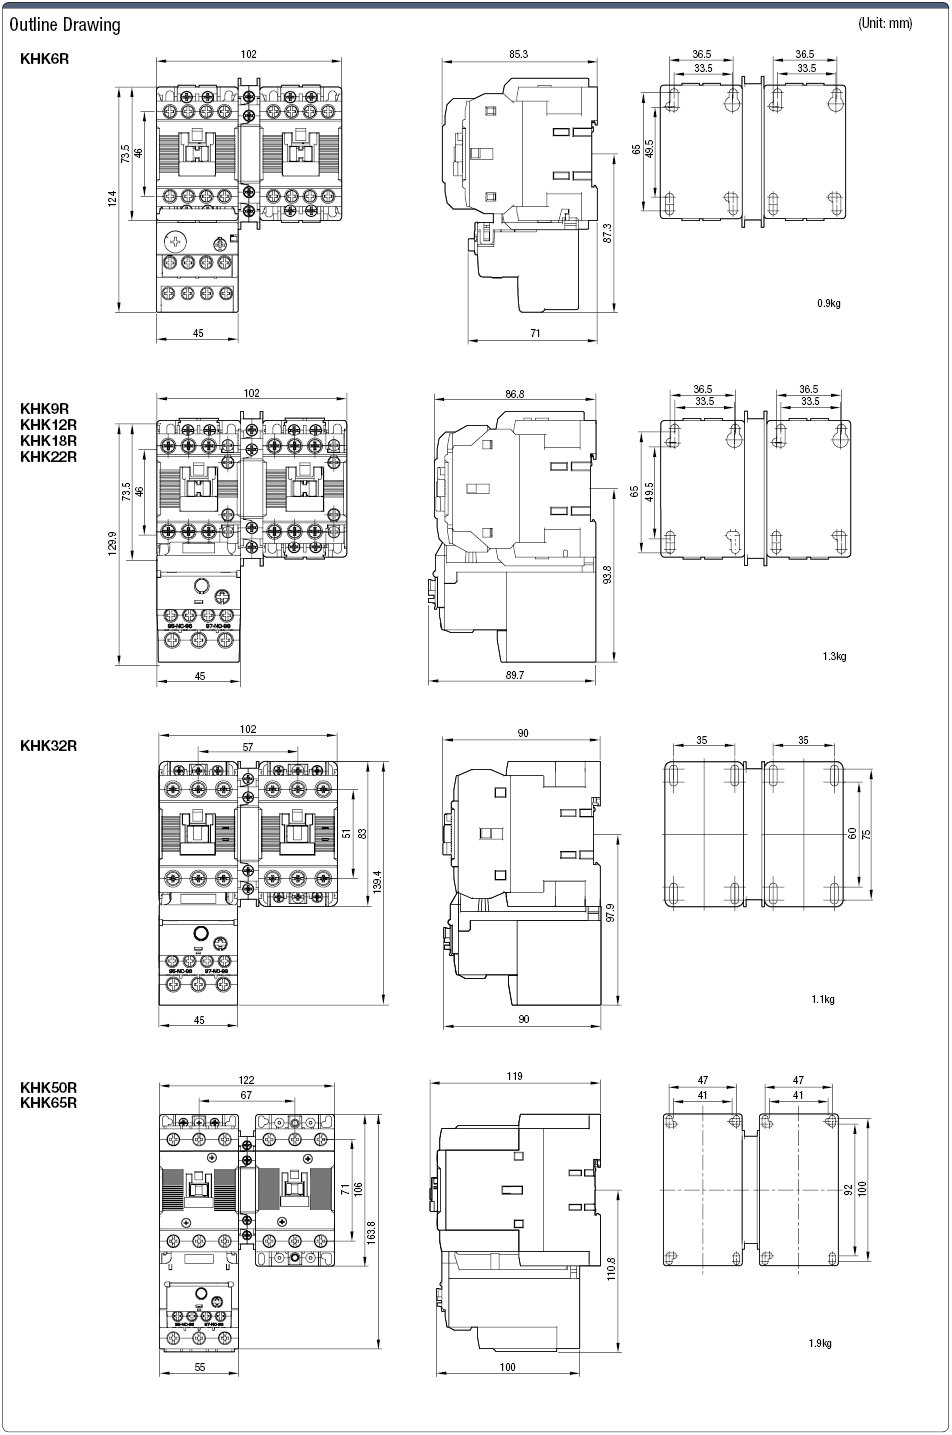 Bobina de interruptor electromagnético reversible de 200 V CA: imagen relacionada